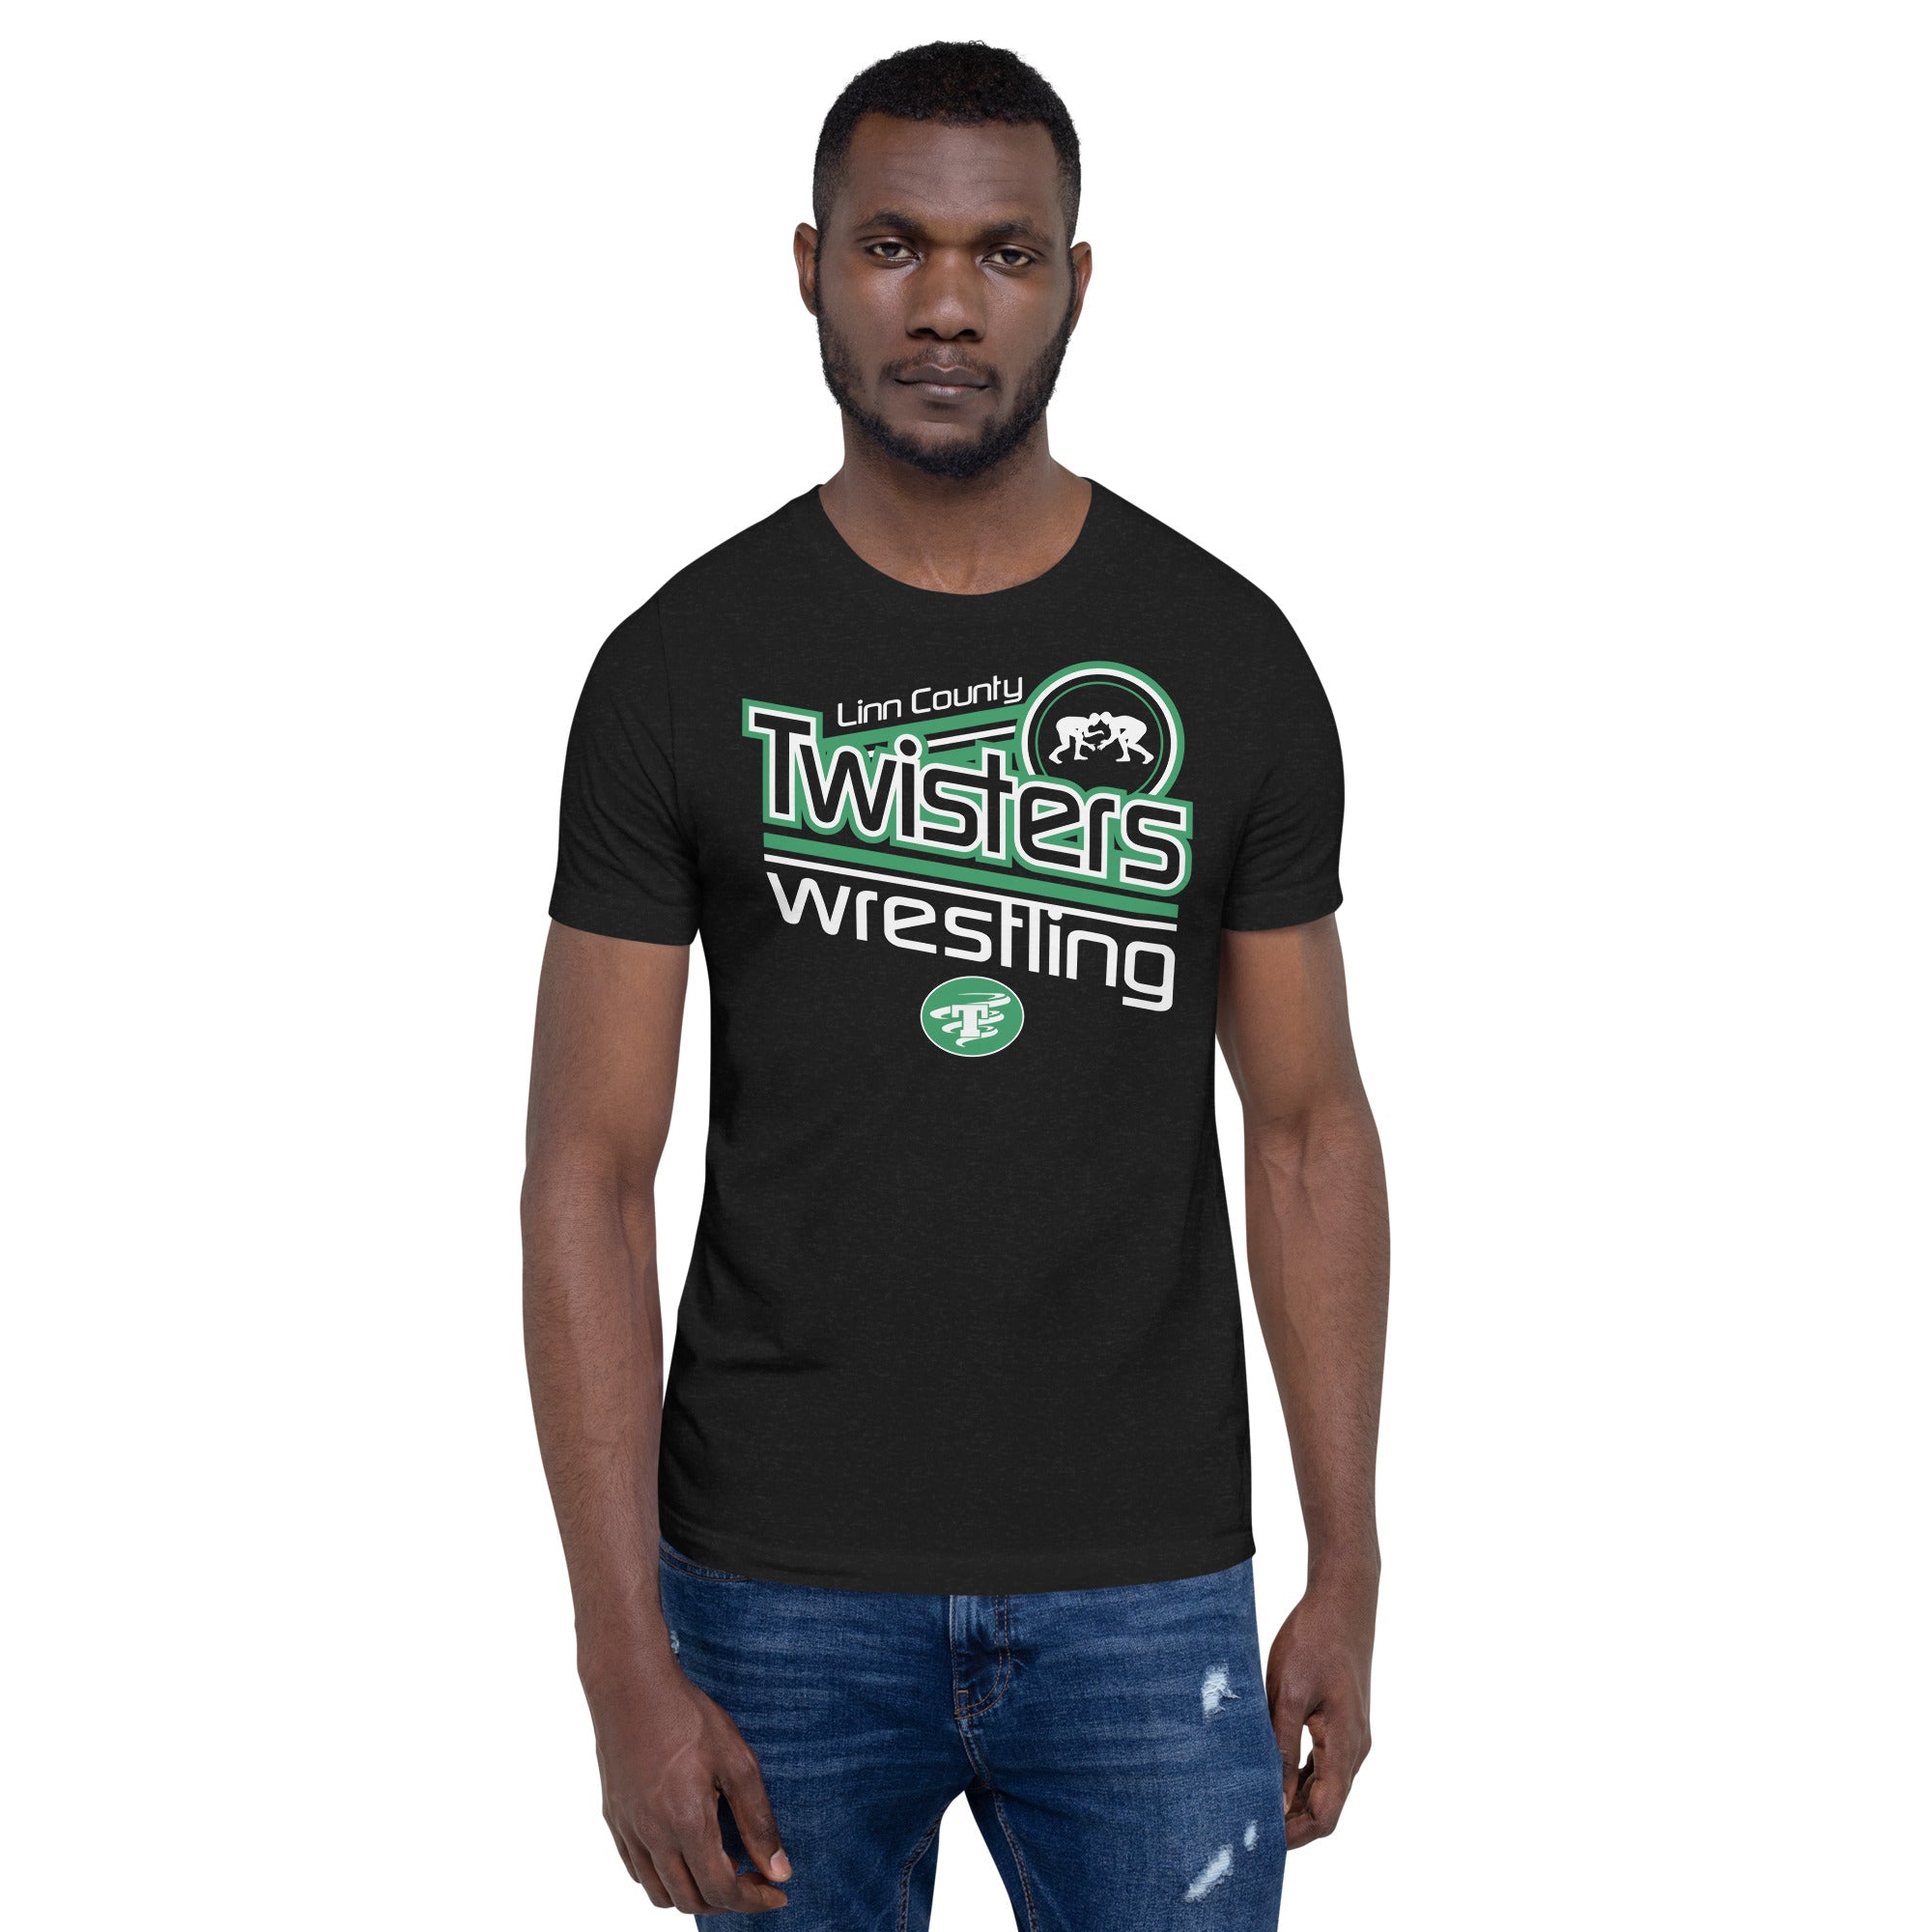 Linn County Twisters Unisex t-shirt